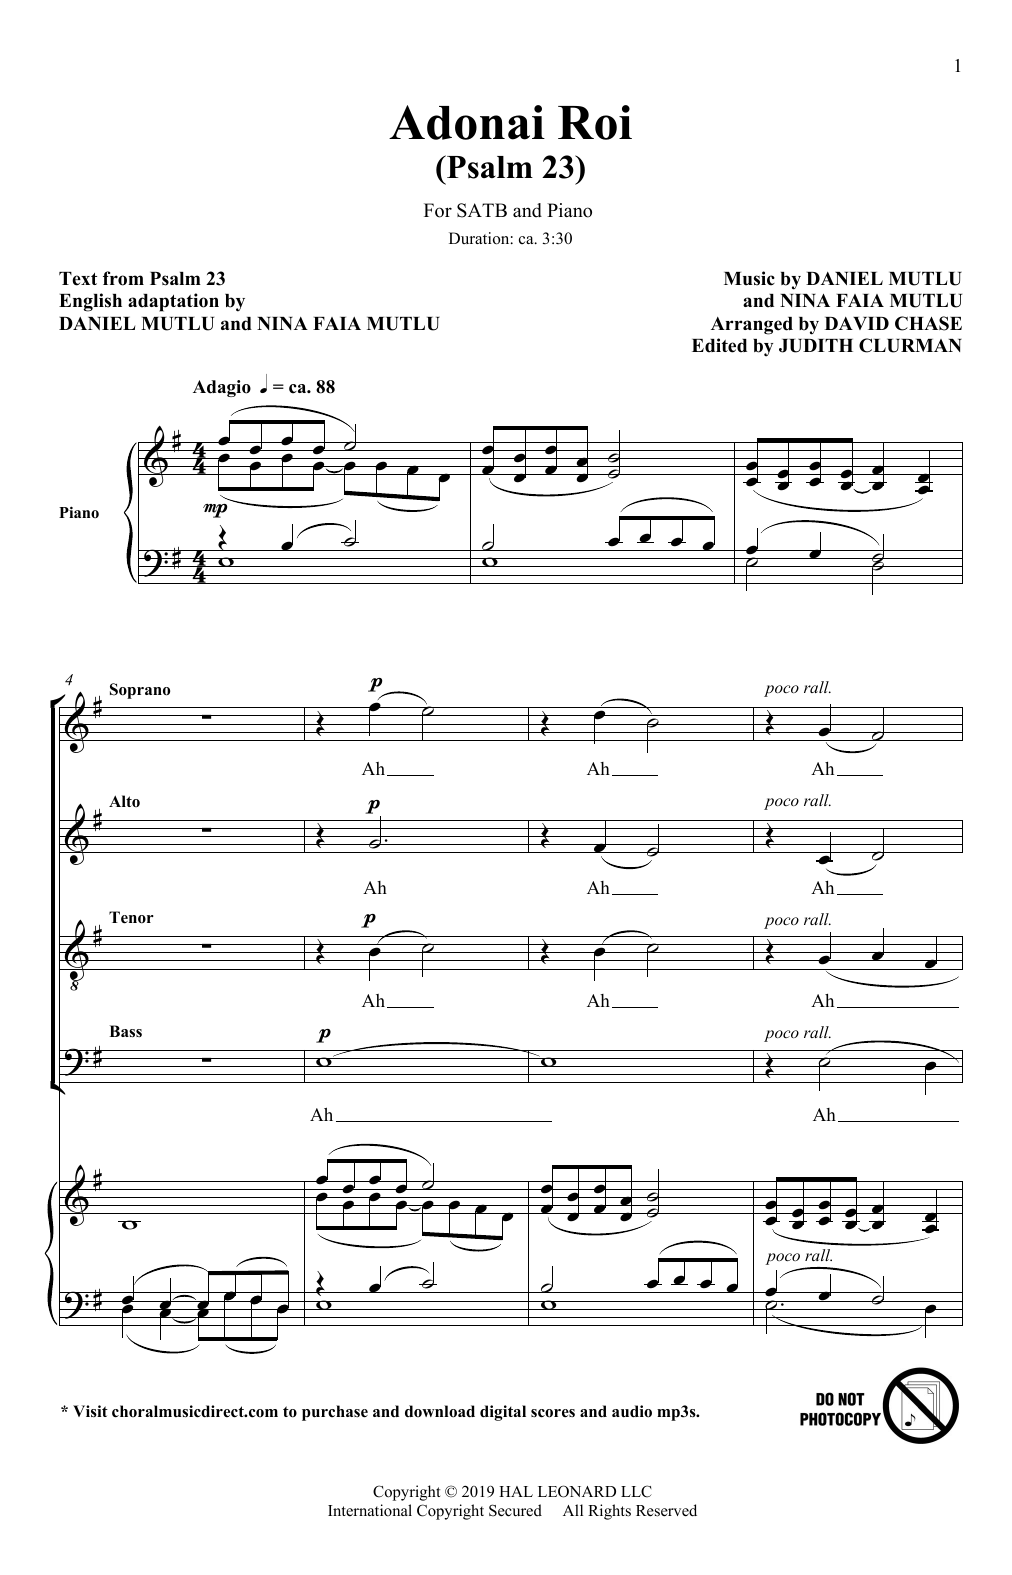 Download Nina Faia Mutlu and Daniel Mutlu Adonai Roi (Psalm 23) (Rejoice: Honoring the Jewish Spirit) (arr. David Chase) Sheet Music and learn how to play SATB Choir PDF digital score in minutes